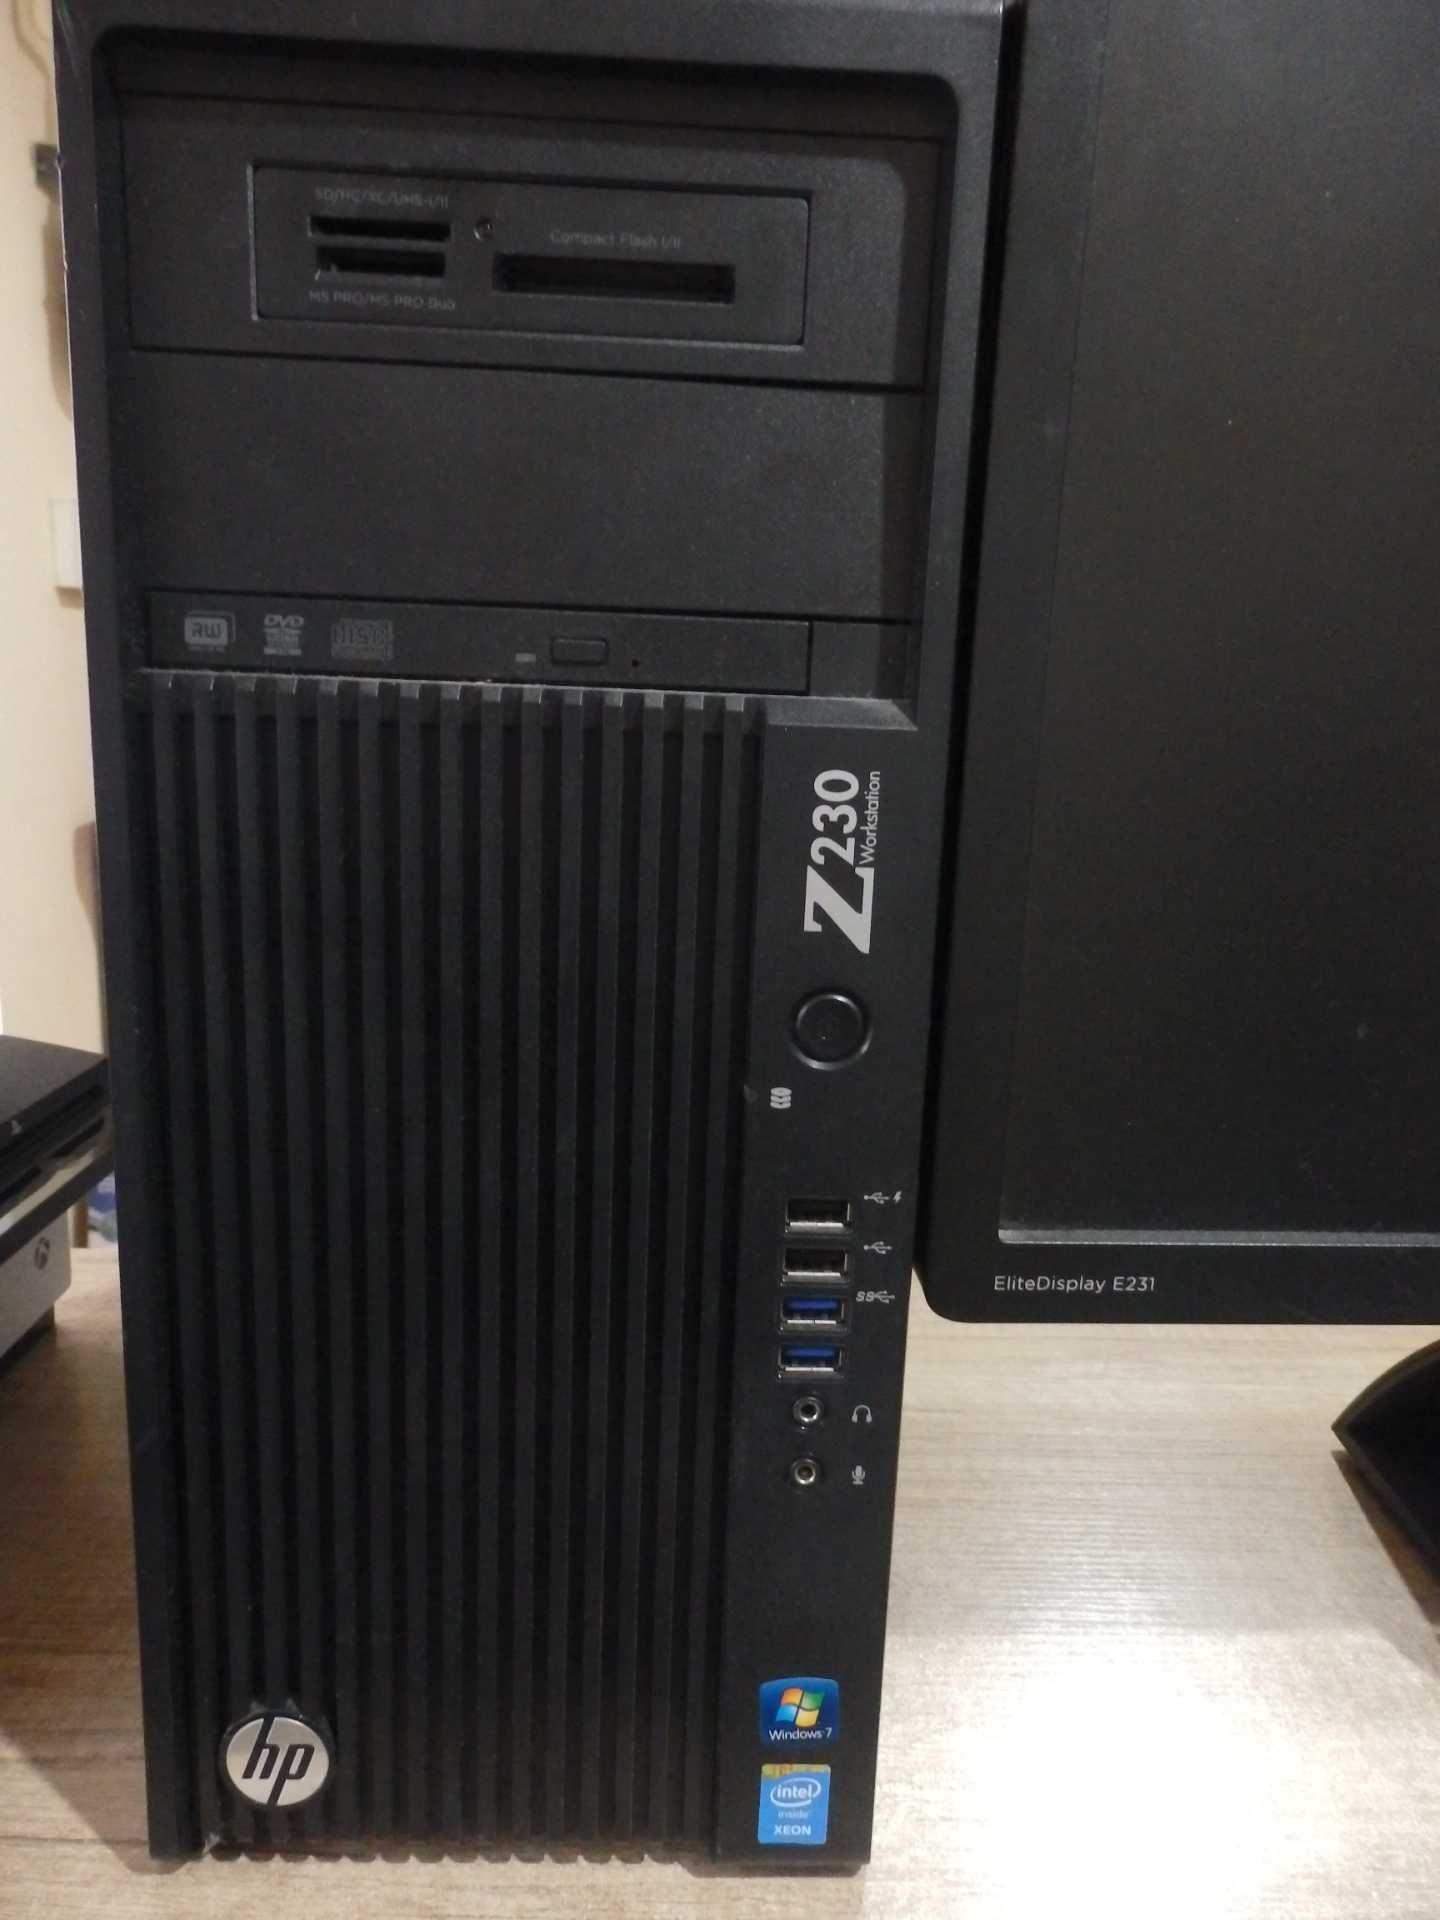 Zestaw komputer HP Z230 monitor HP E231 !!!